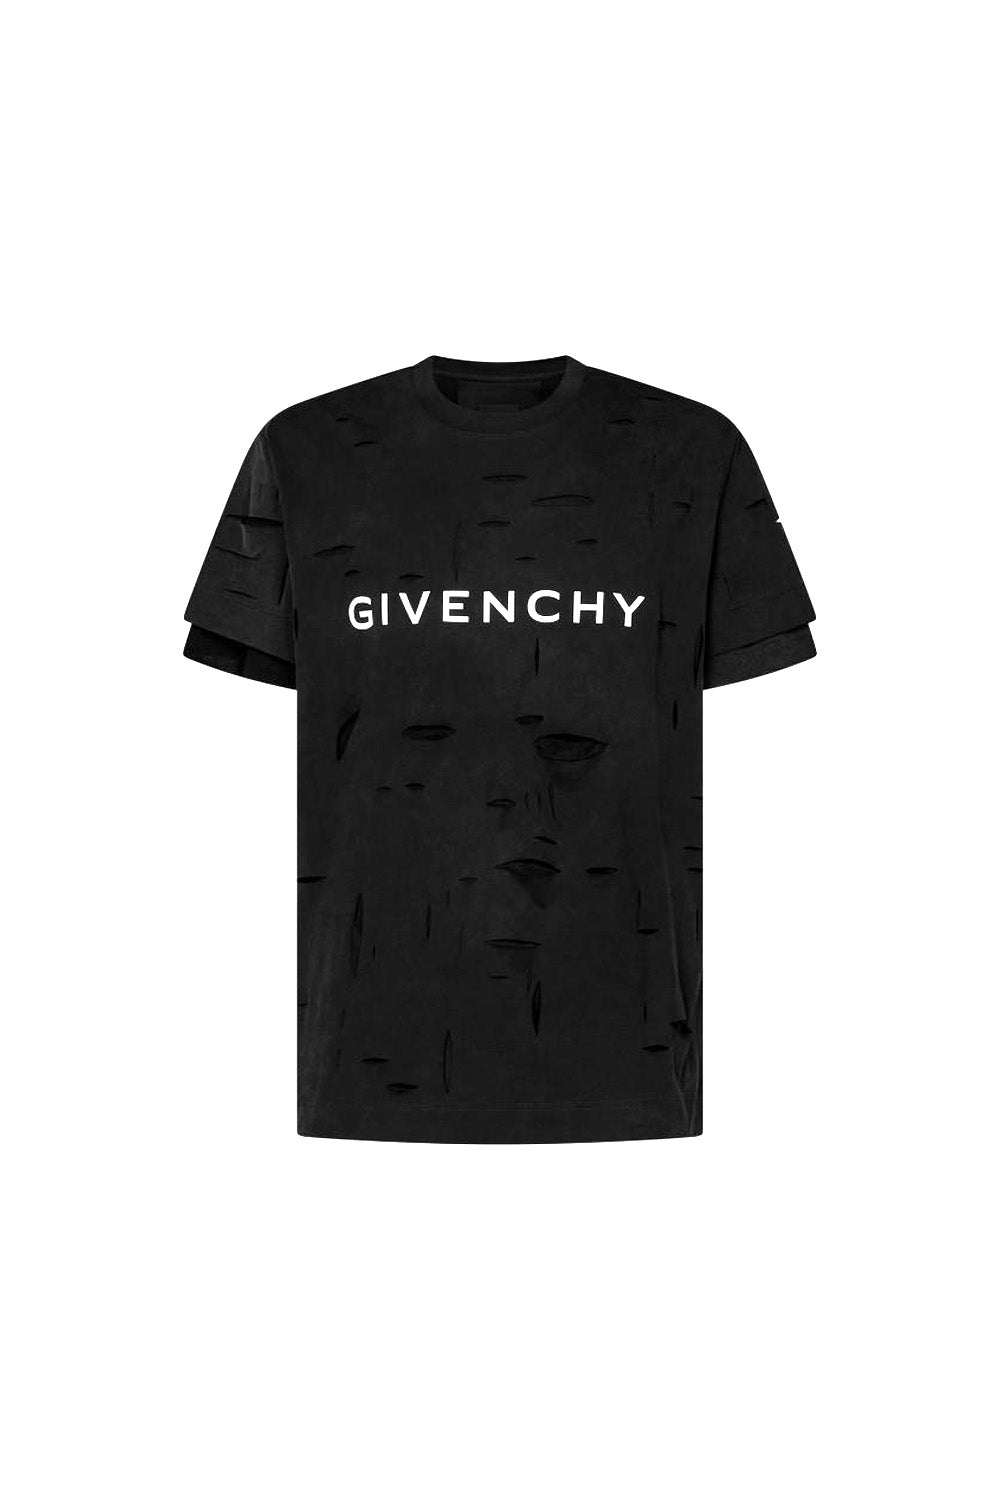 Givenchy cut-out cotton T-shirt